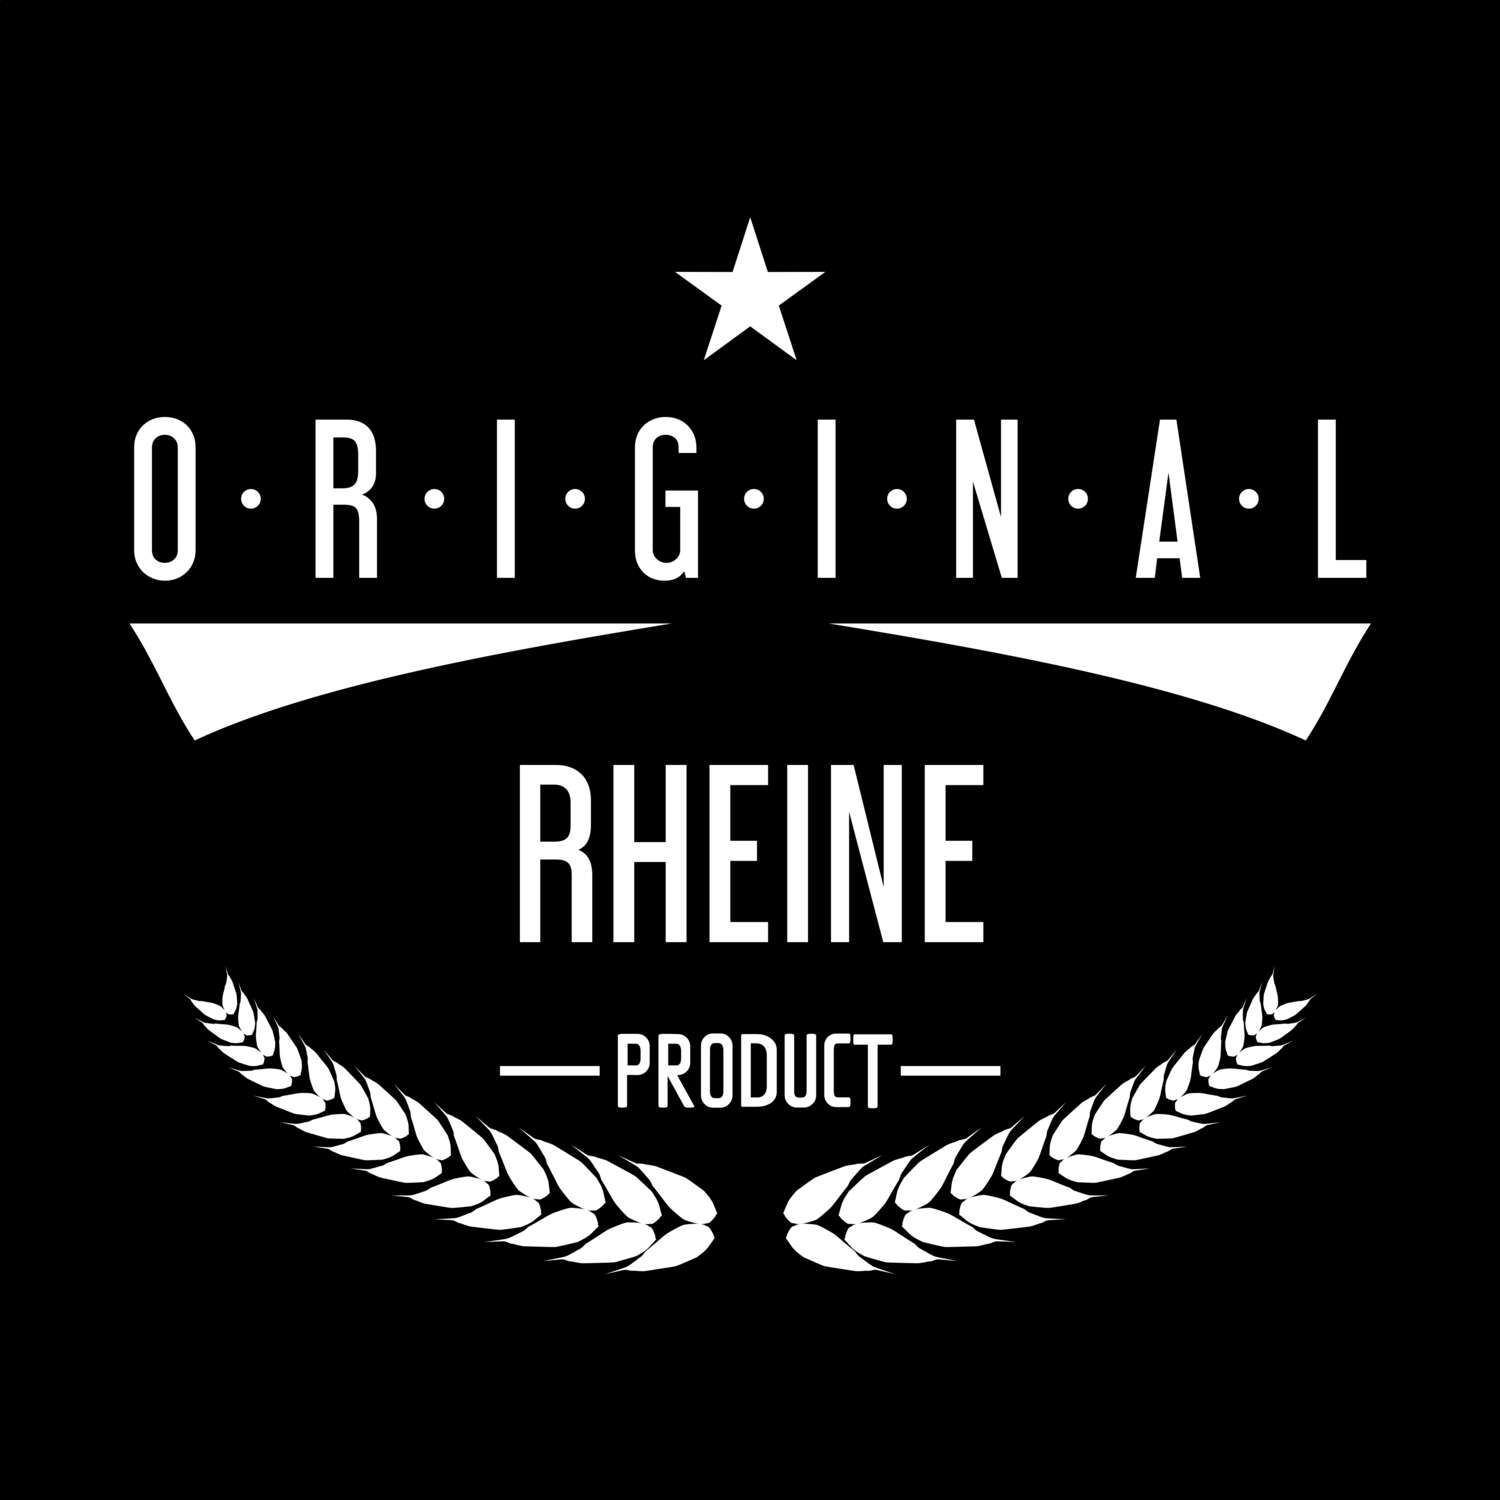 Rheine T-Shirt »Original Product«